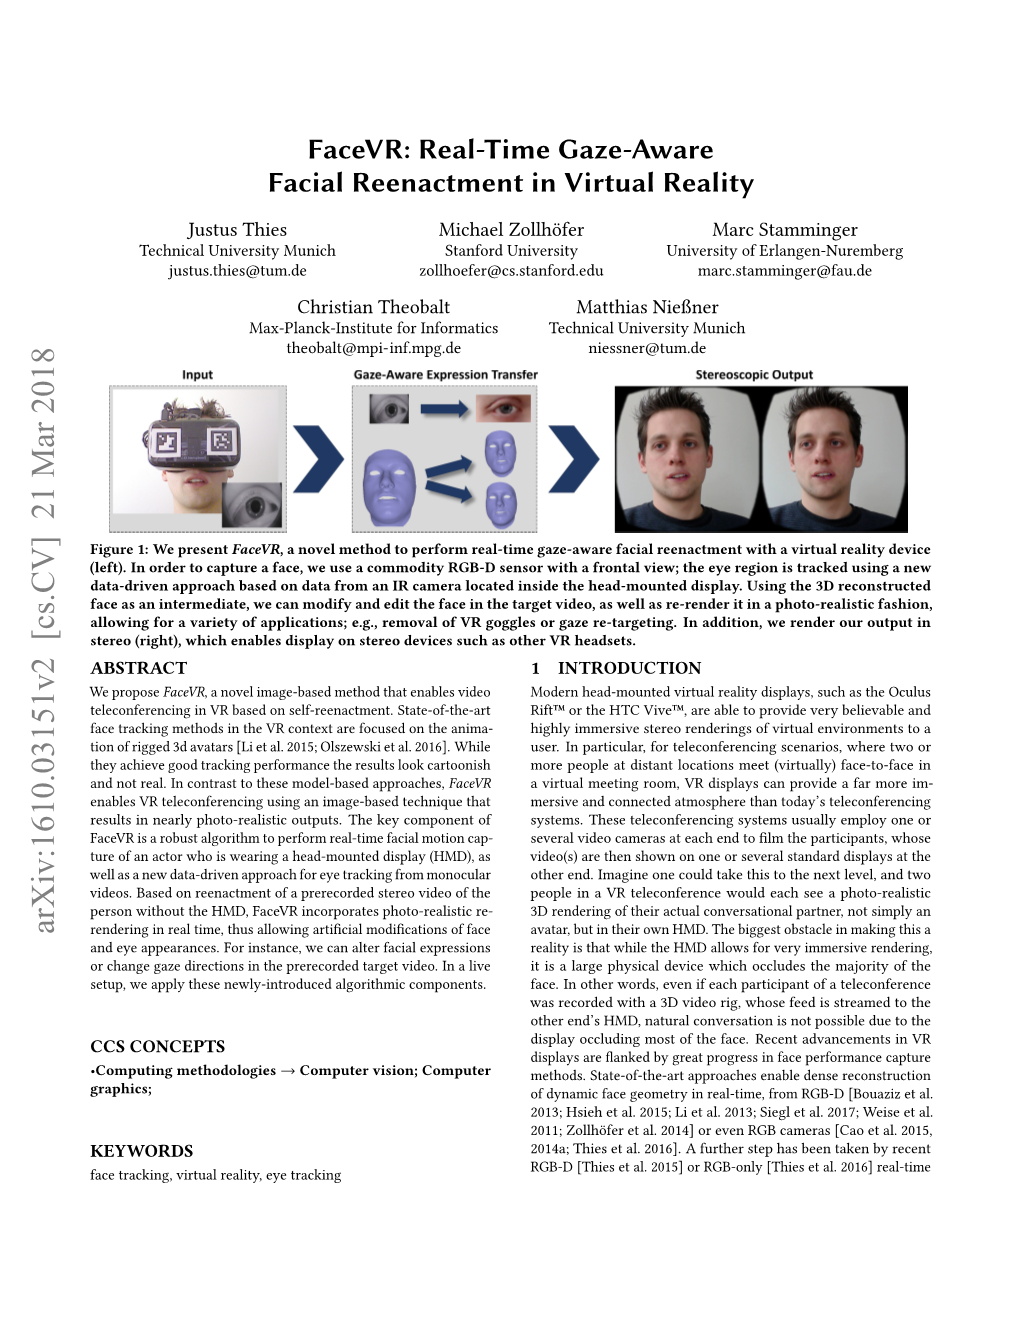 Facevr: Real-Time Gaze-Aware Facial Reenactment in Virtual Reality